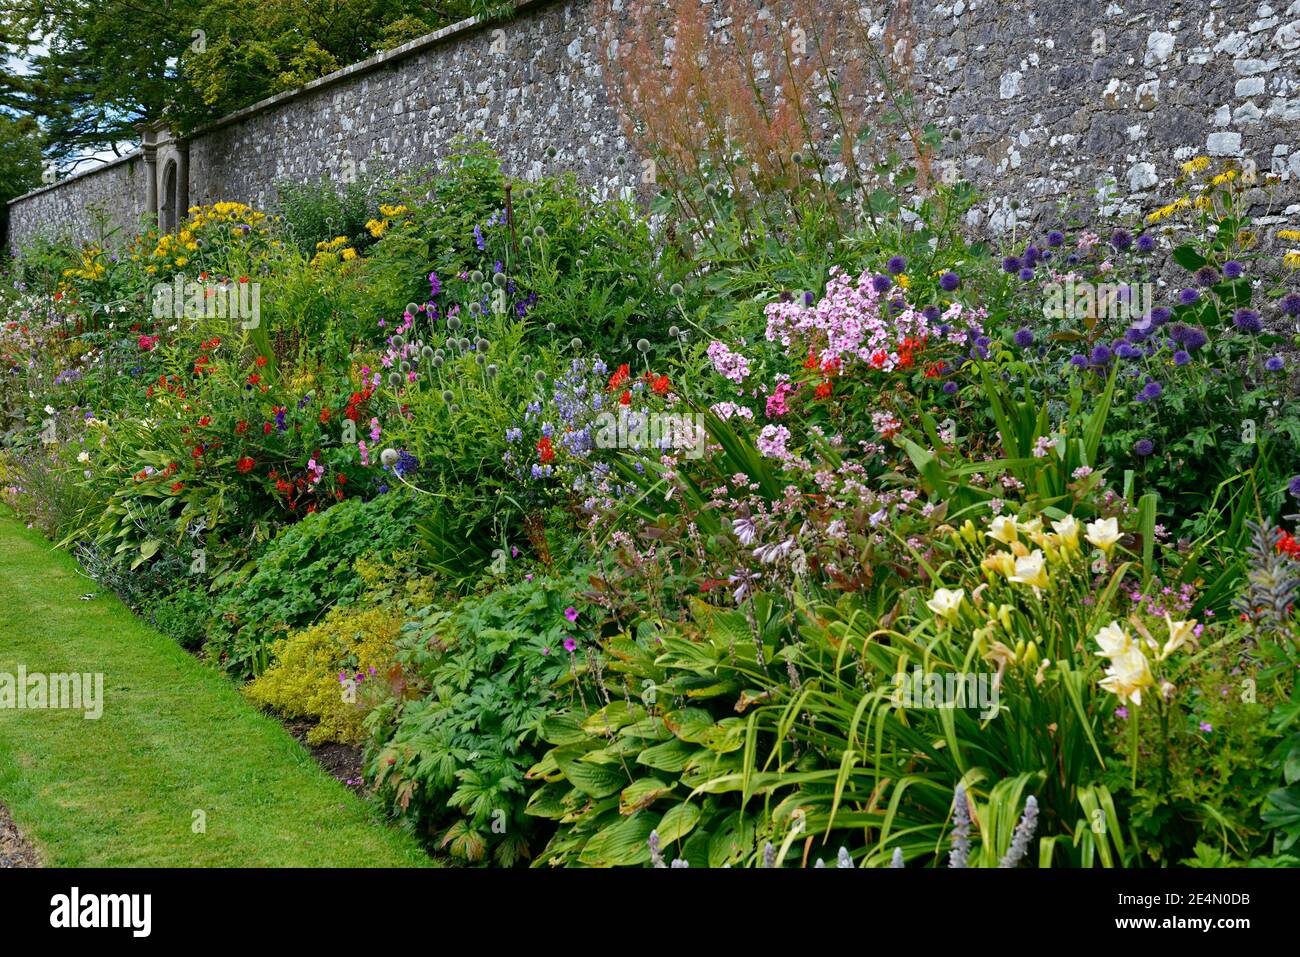 walled garden,herbaceous border,mixed planting scheme,phlox,crocosmia,echinops,daylily,hosta,geranium,acanthus,RM Floral Stock Photo